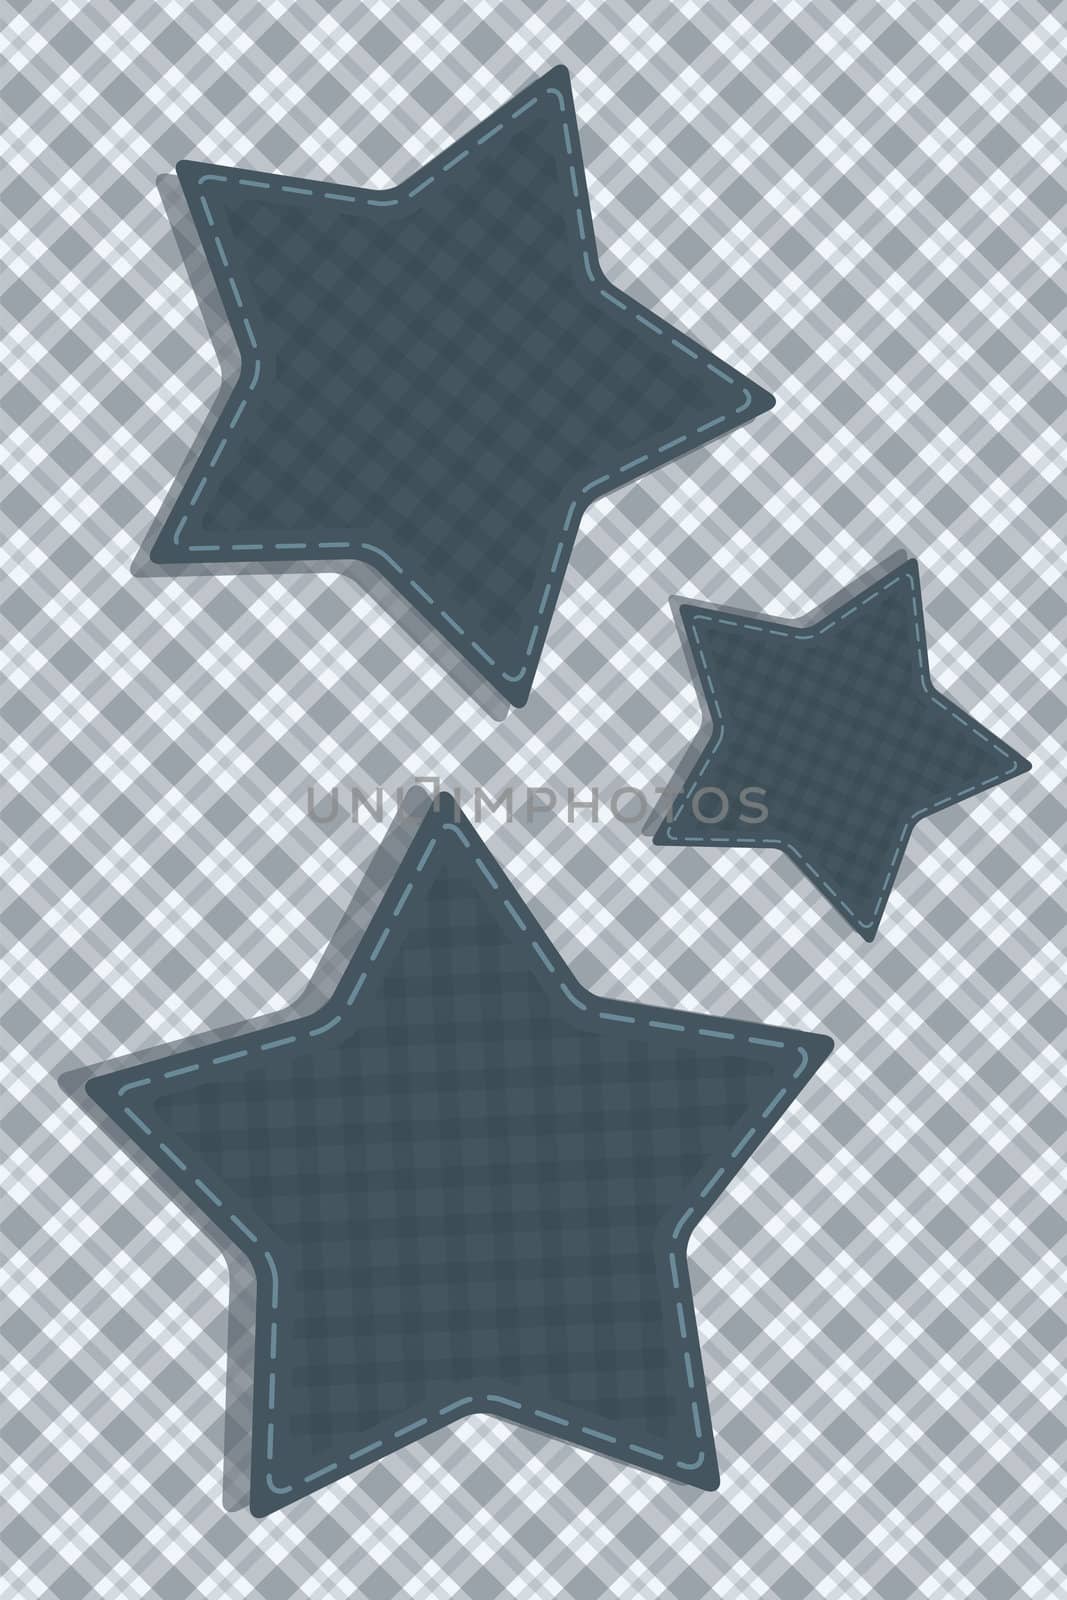 Tartan textile stylized Stars illustration.